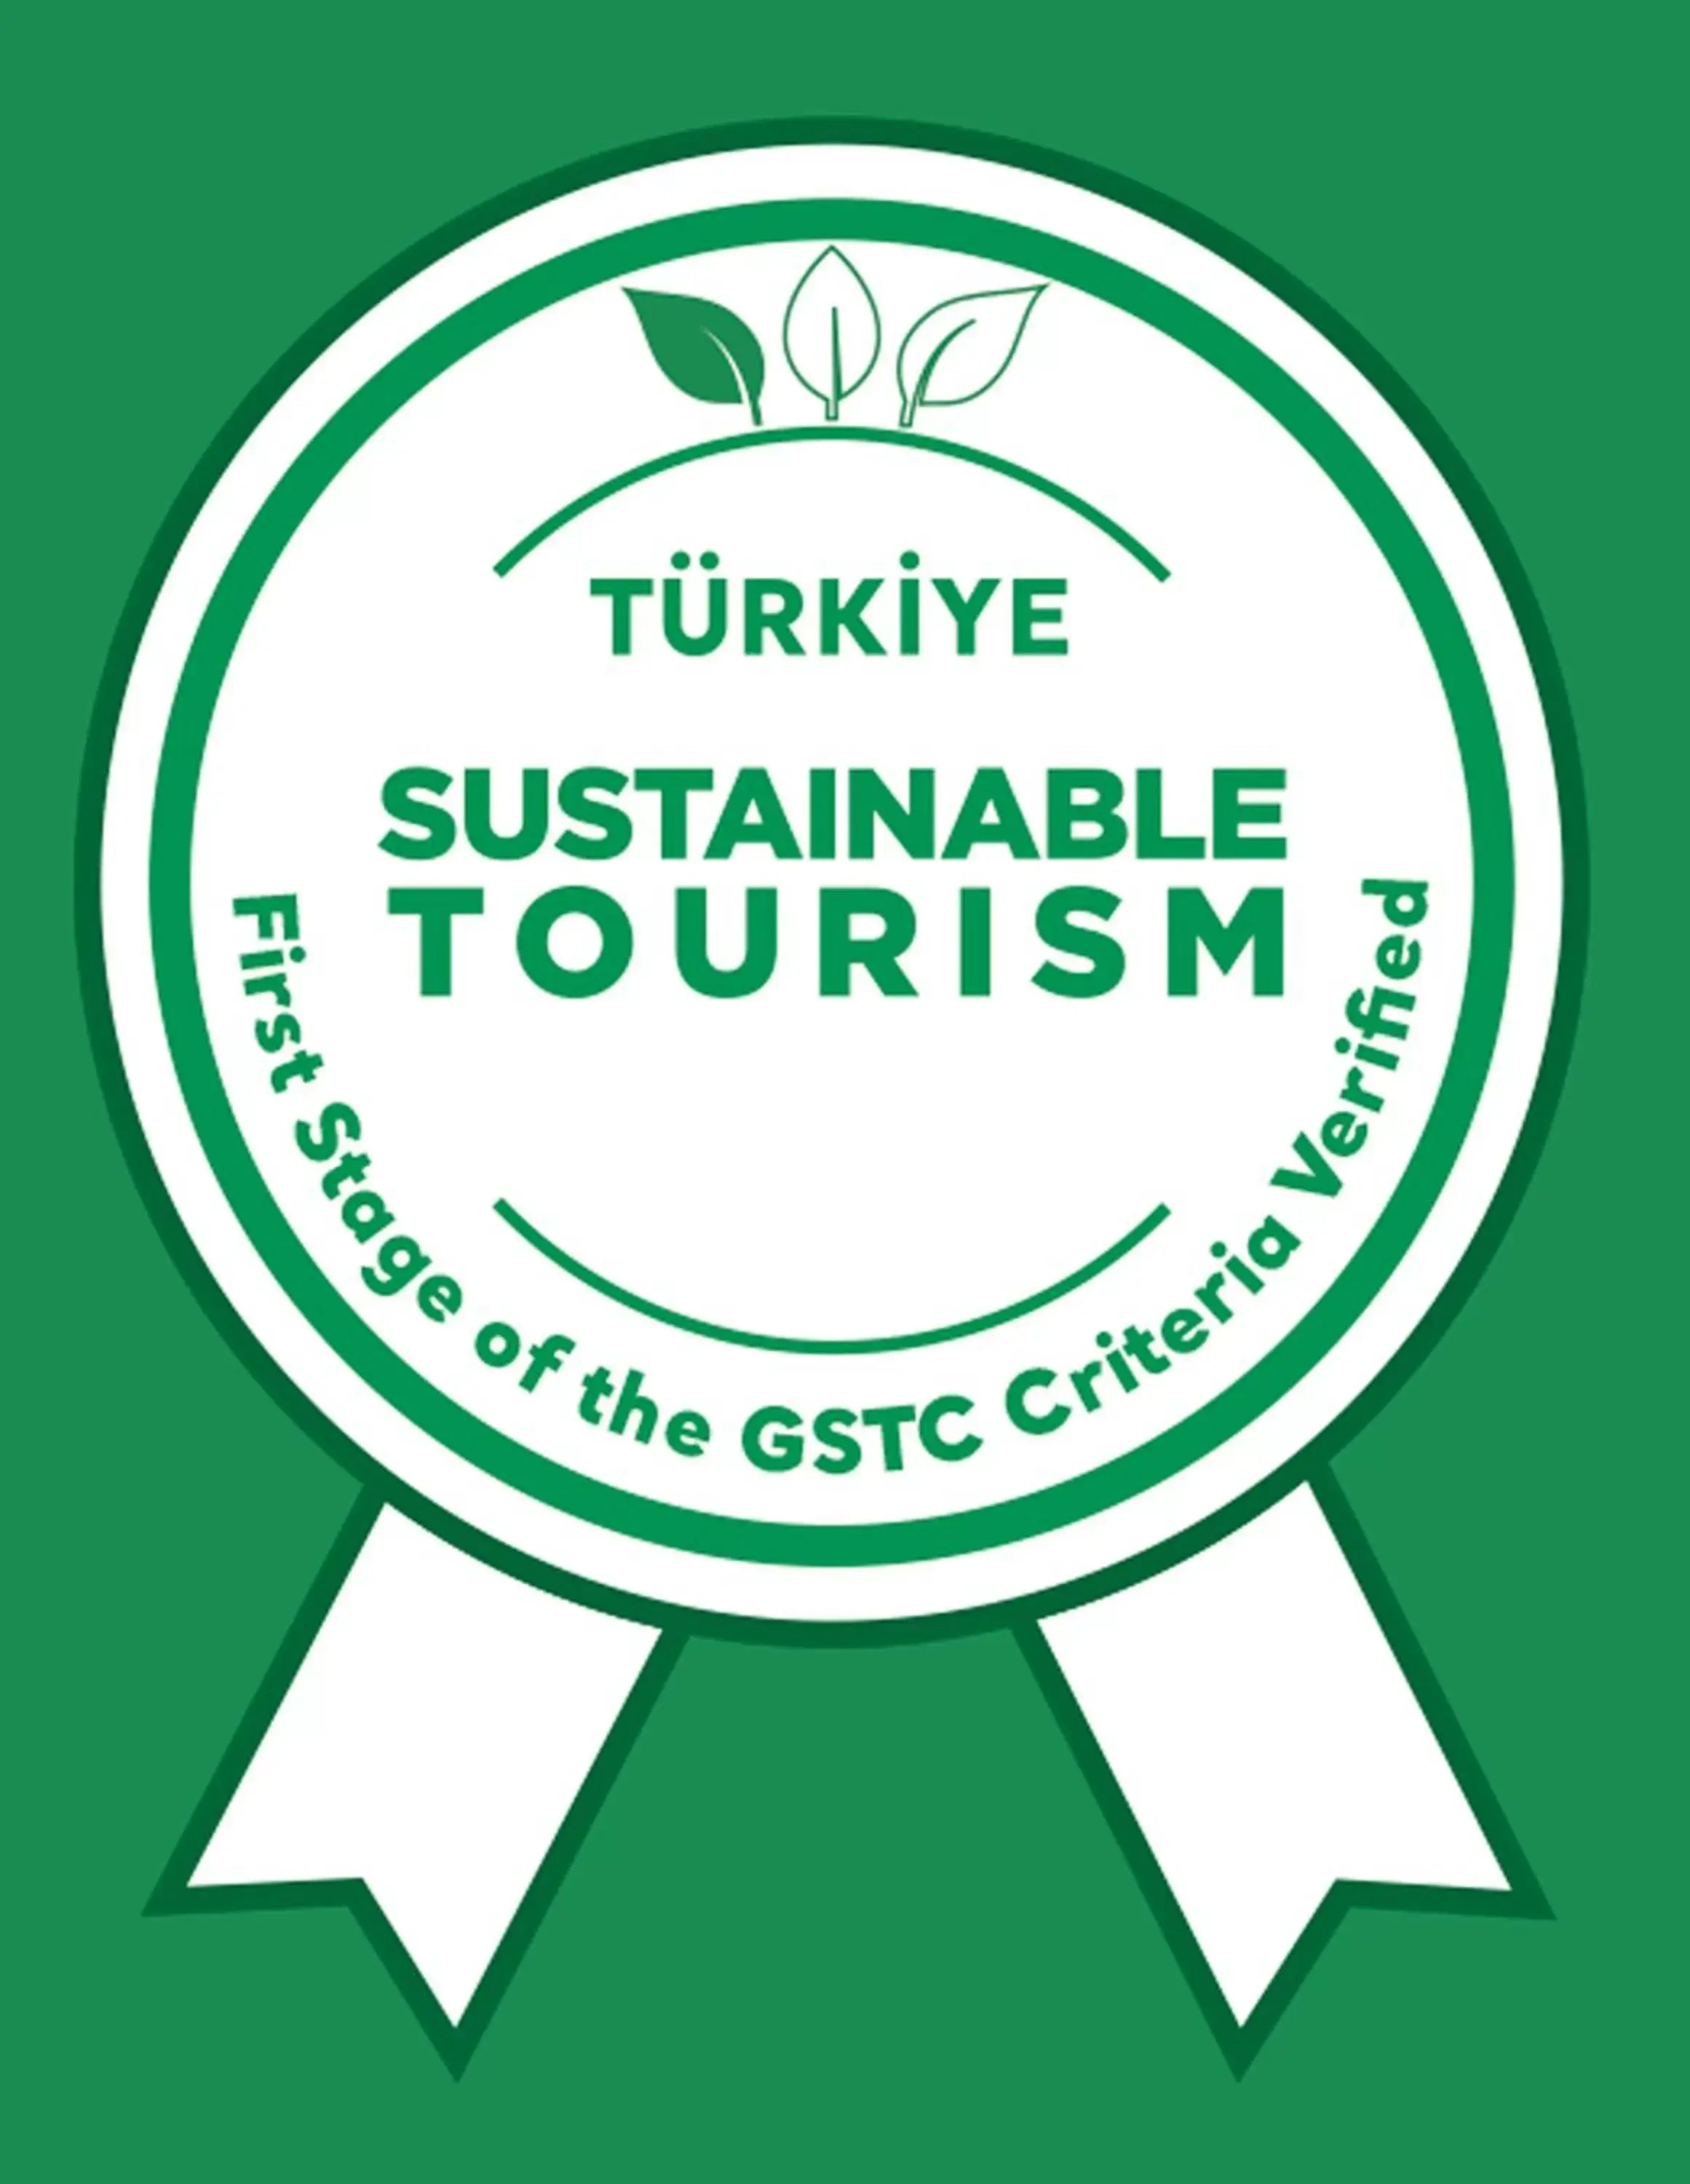 Certificate/Award in Wyndham Grand Istanbul Europe